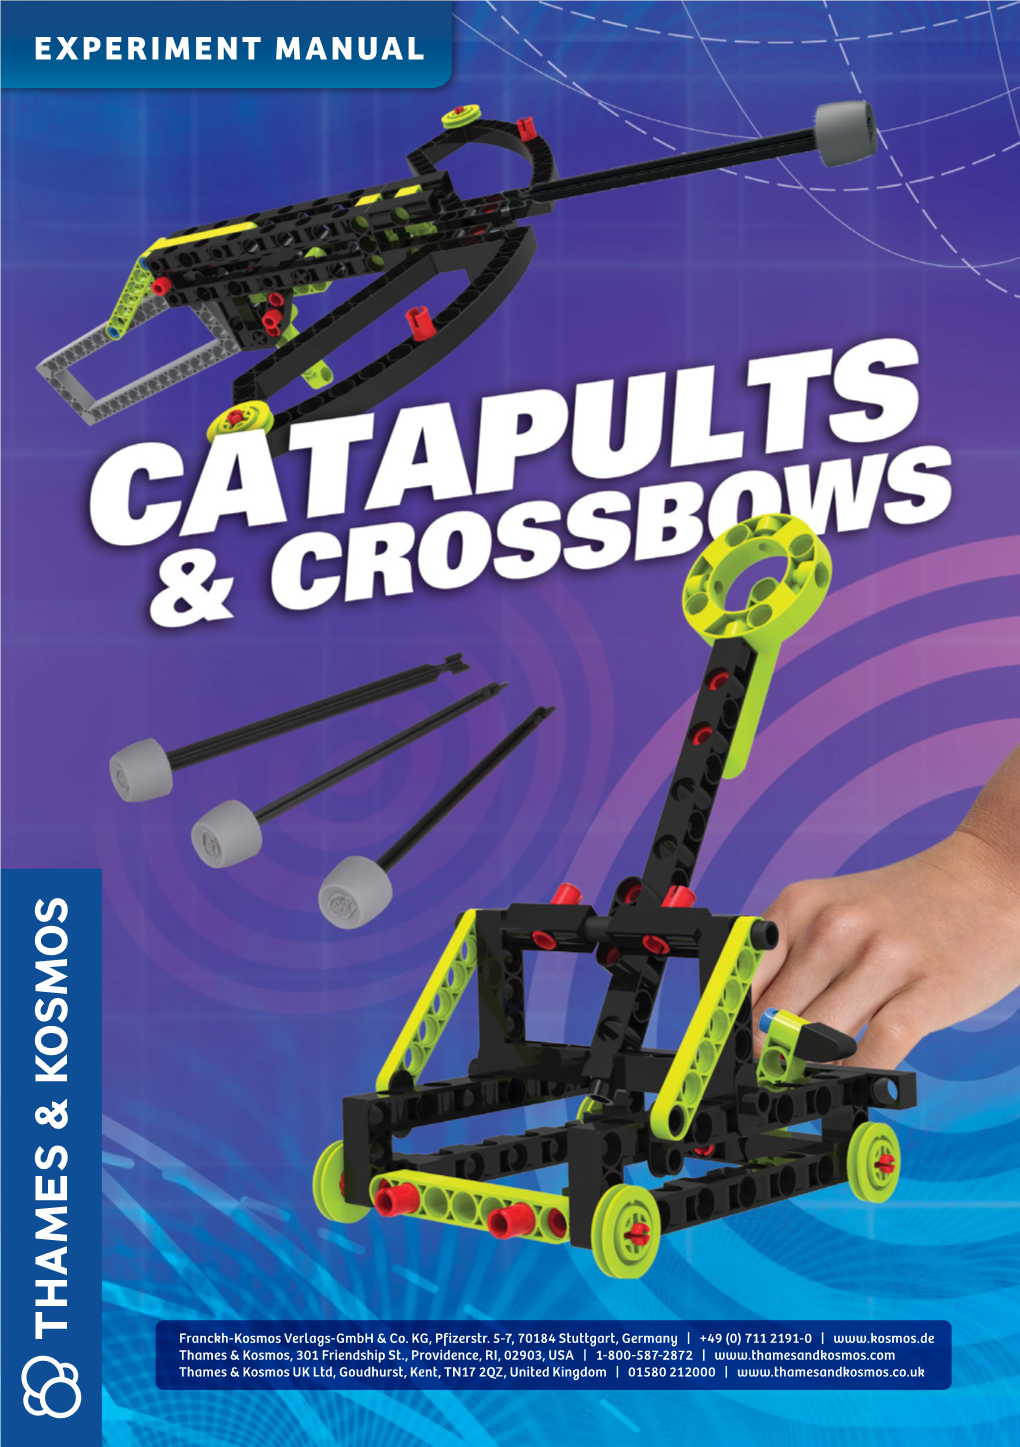 Catapults & Crossbows Kit Manual Sample (PDF Download)